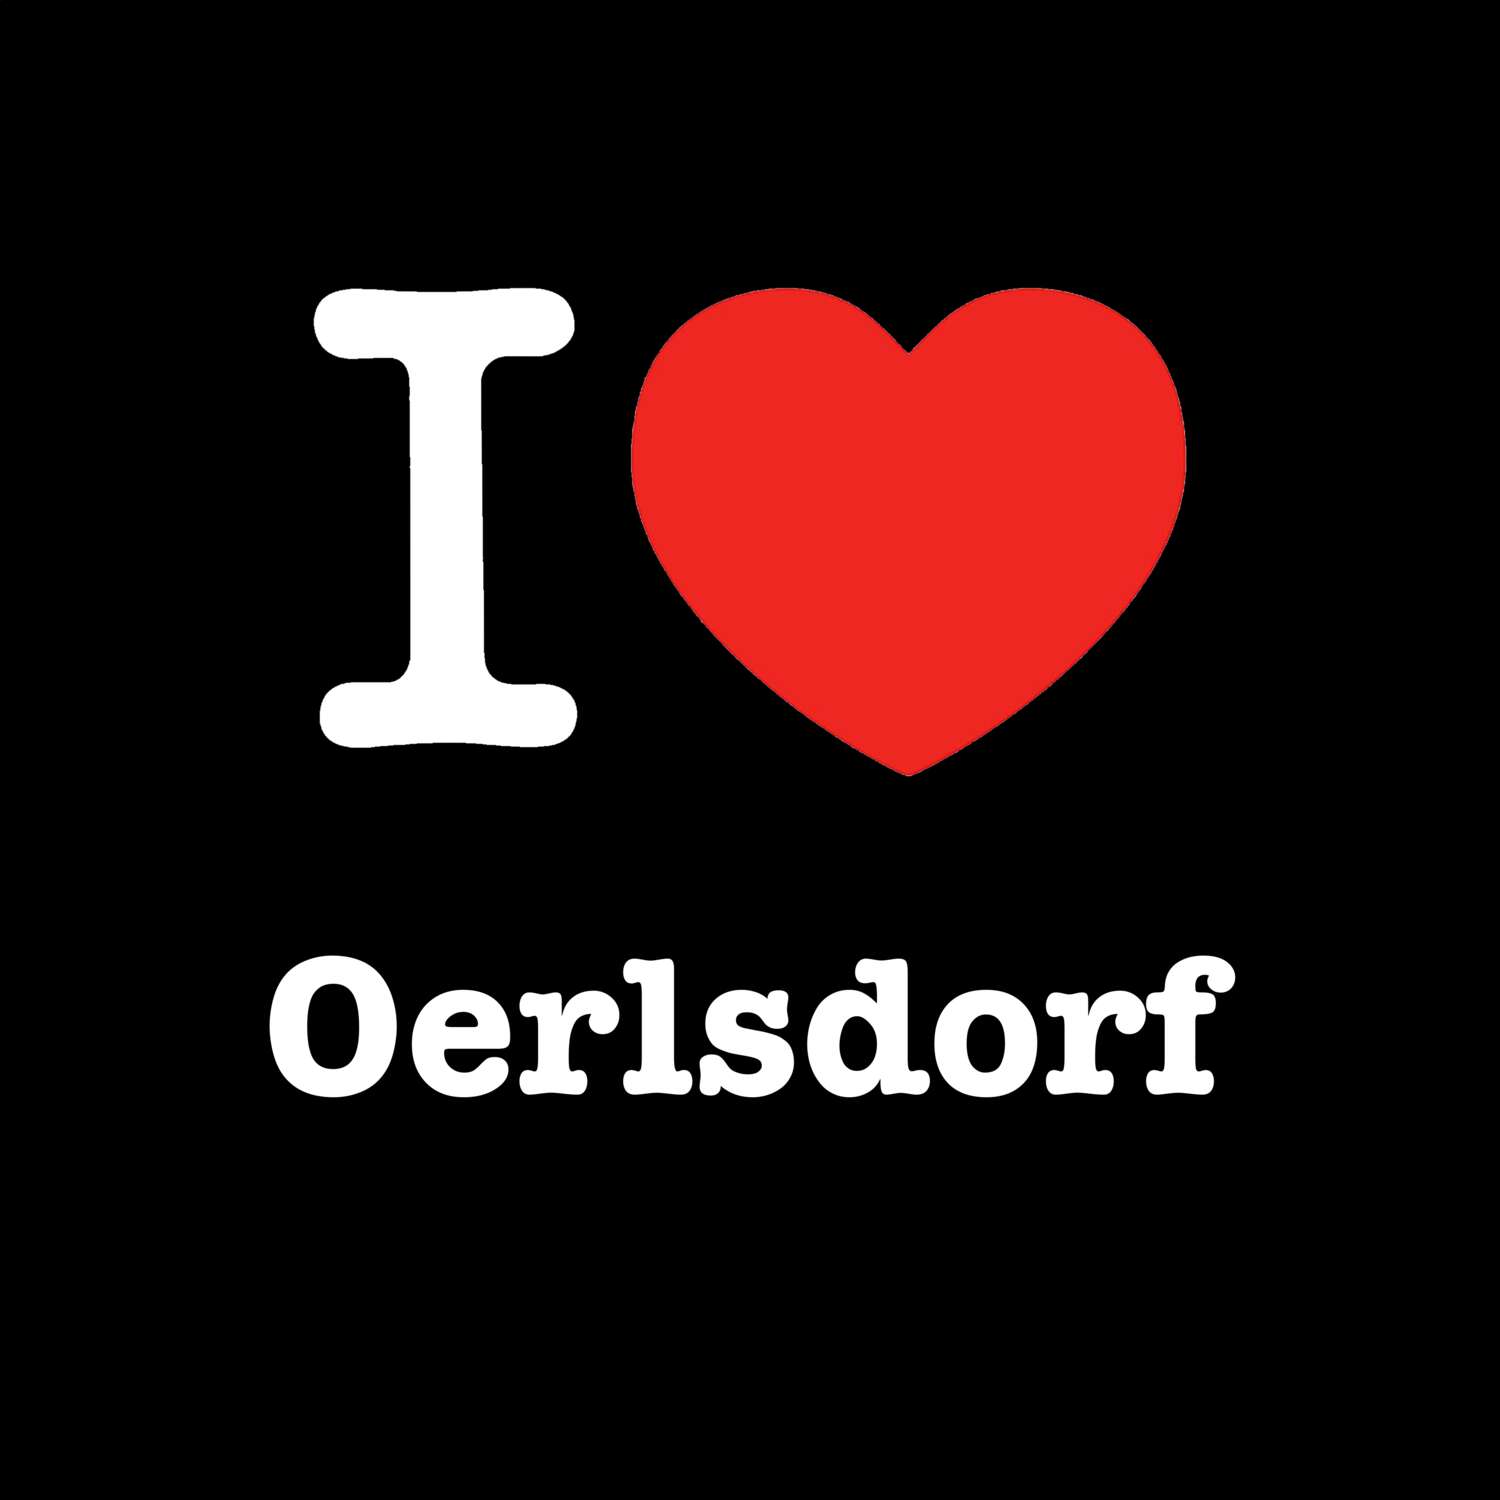 Oerlsdorf T-Shirt »I love«